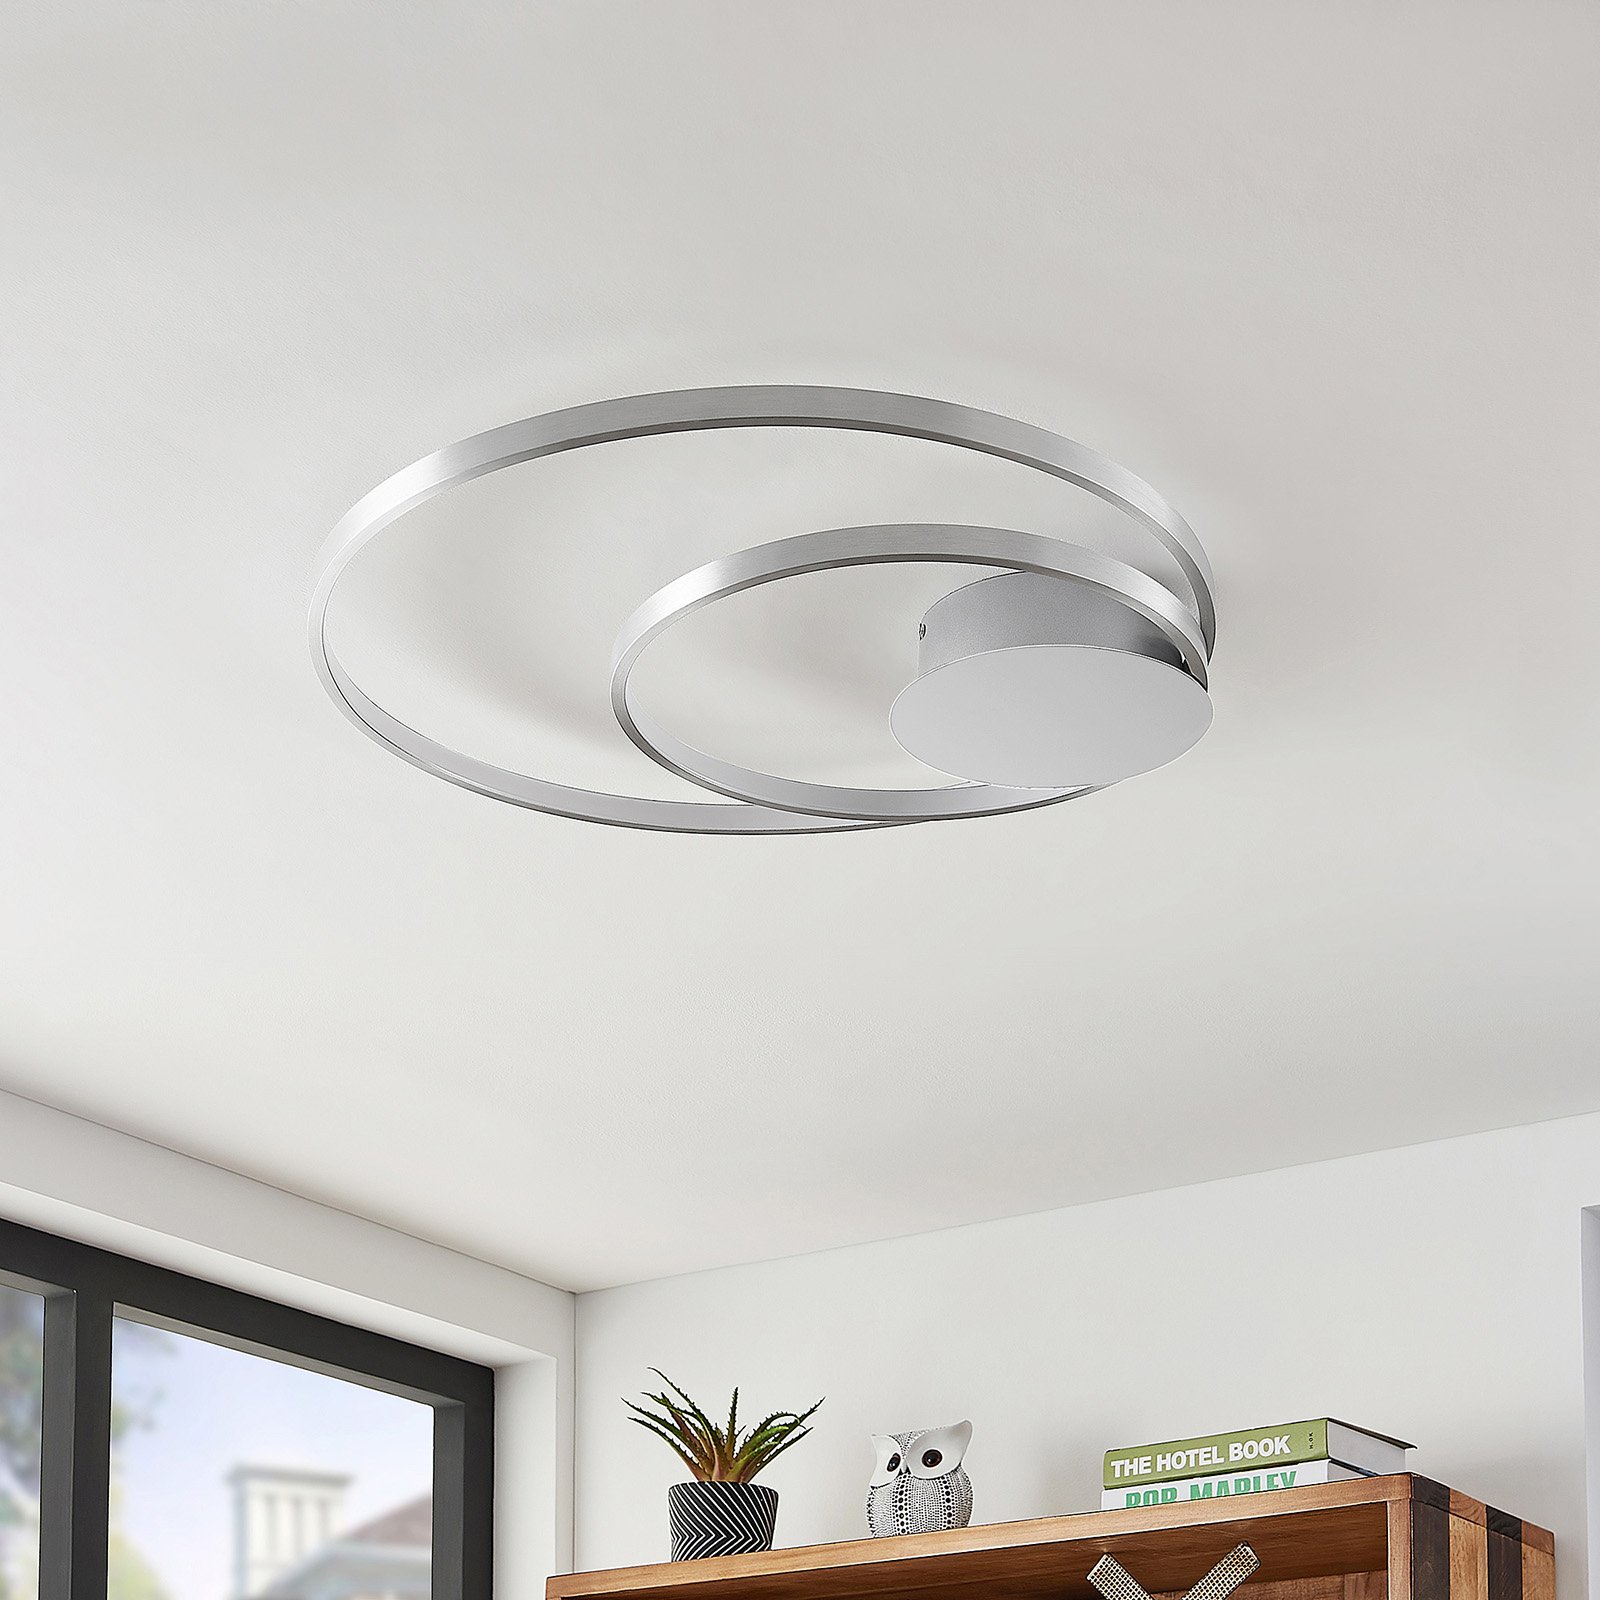 Lindby Nerwin LED plafondlamp, rond, alu/chroom